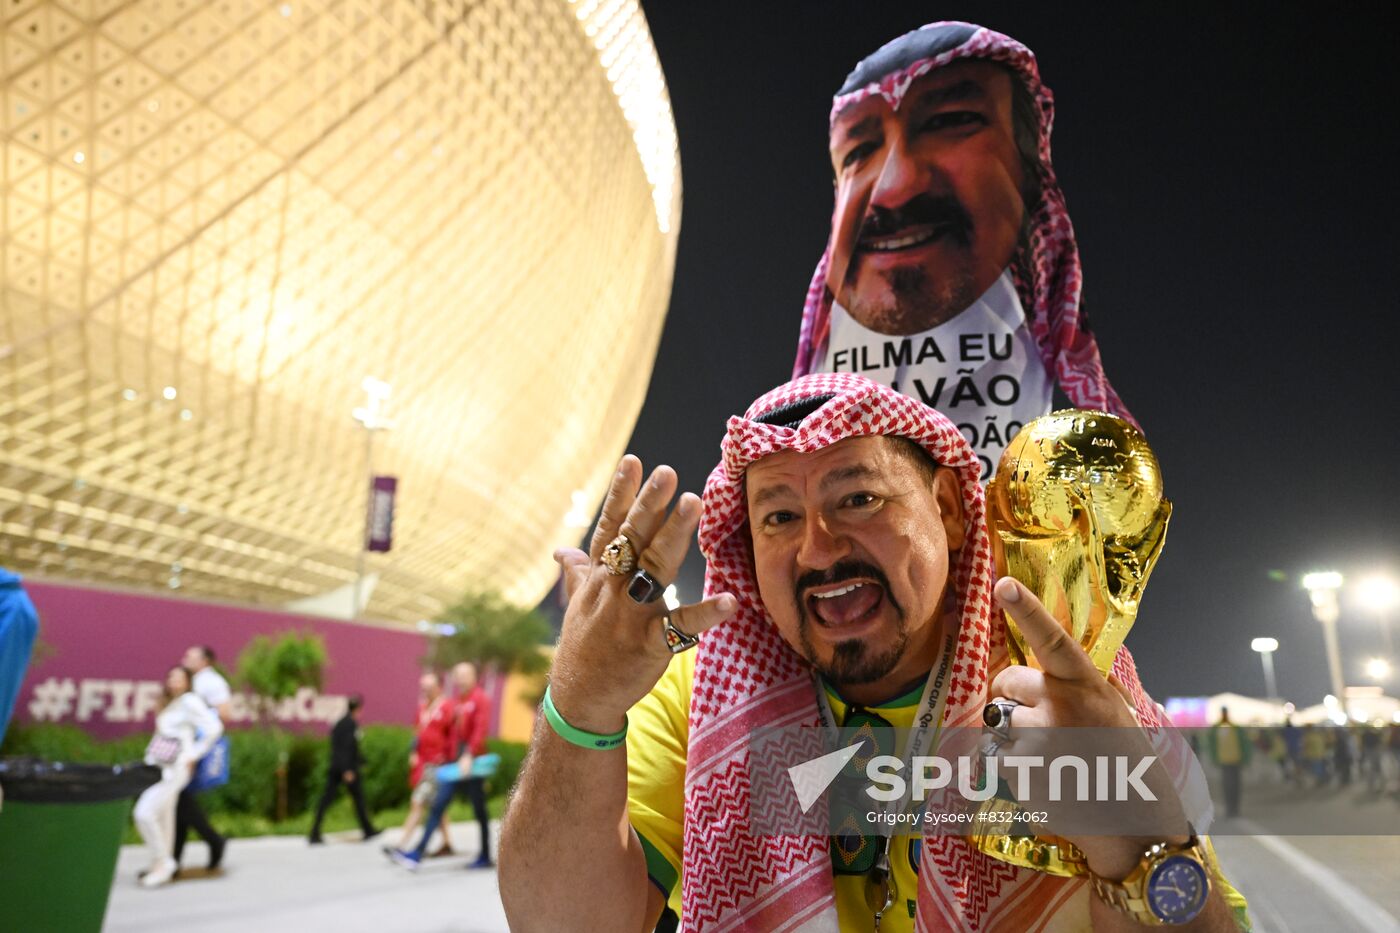 Qatar Soccer World Cup Brazil - Serbia